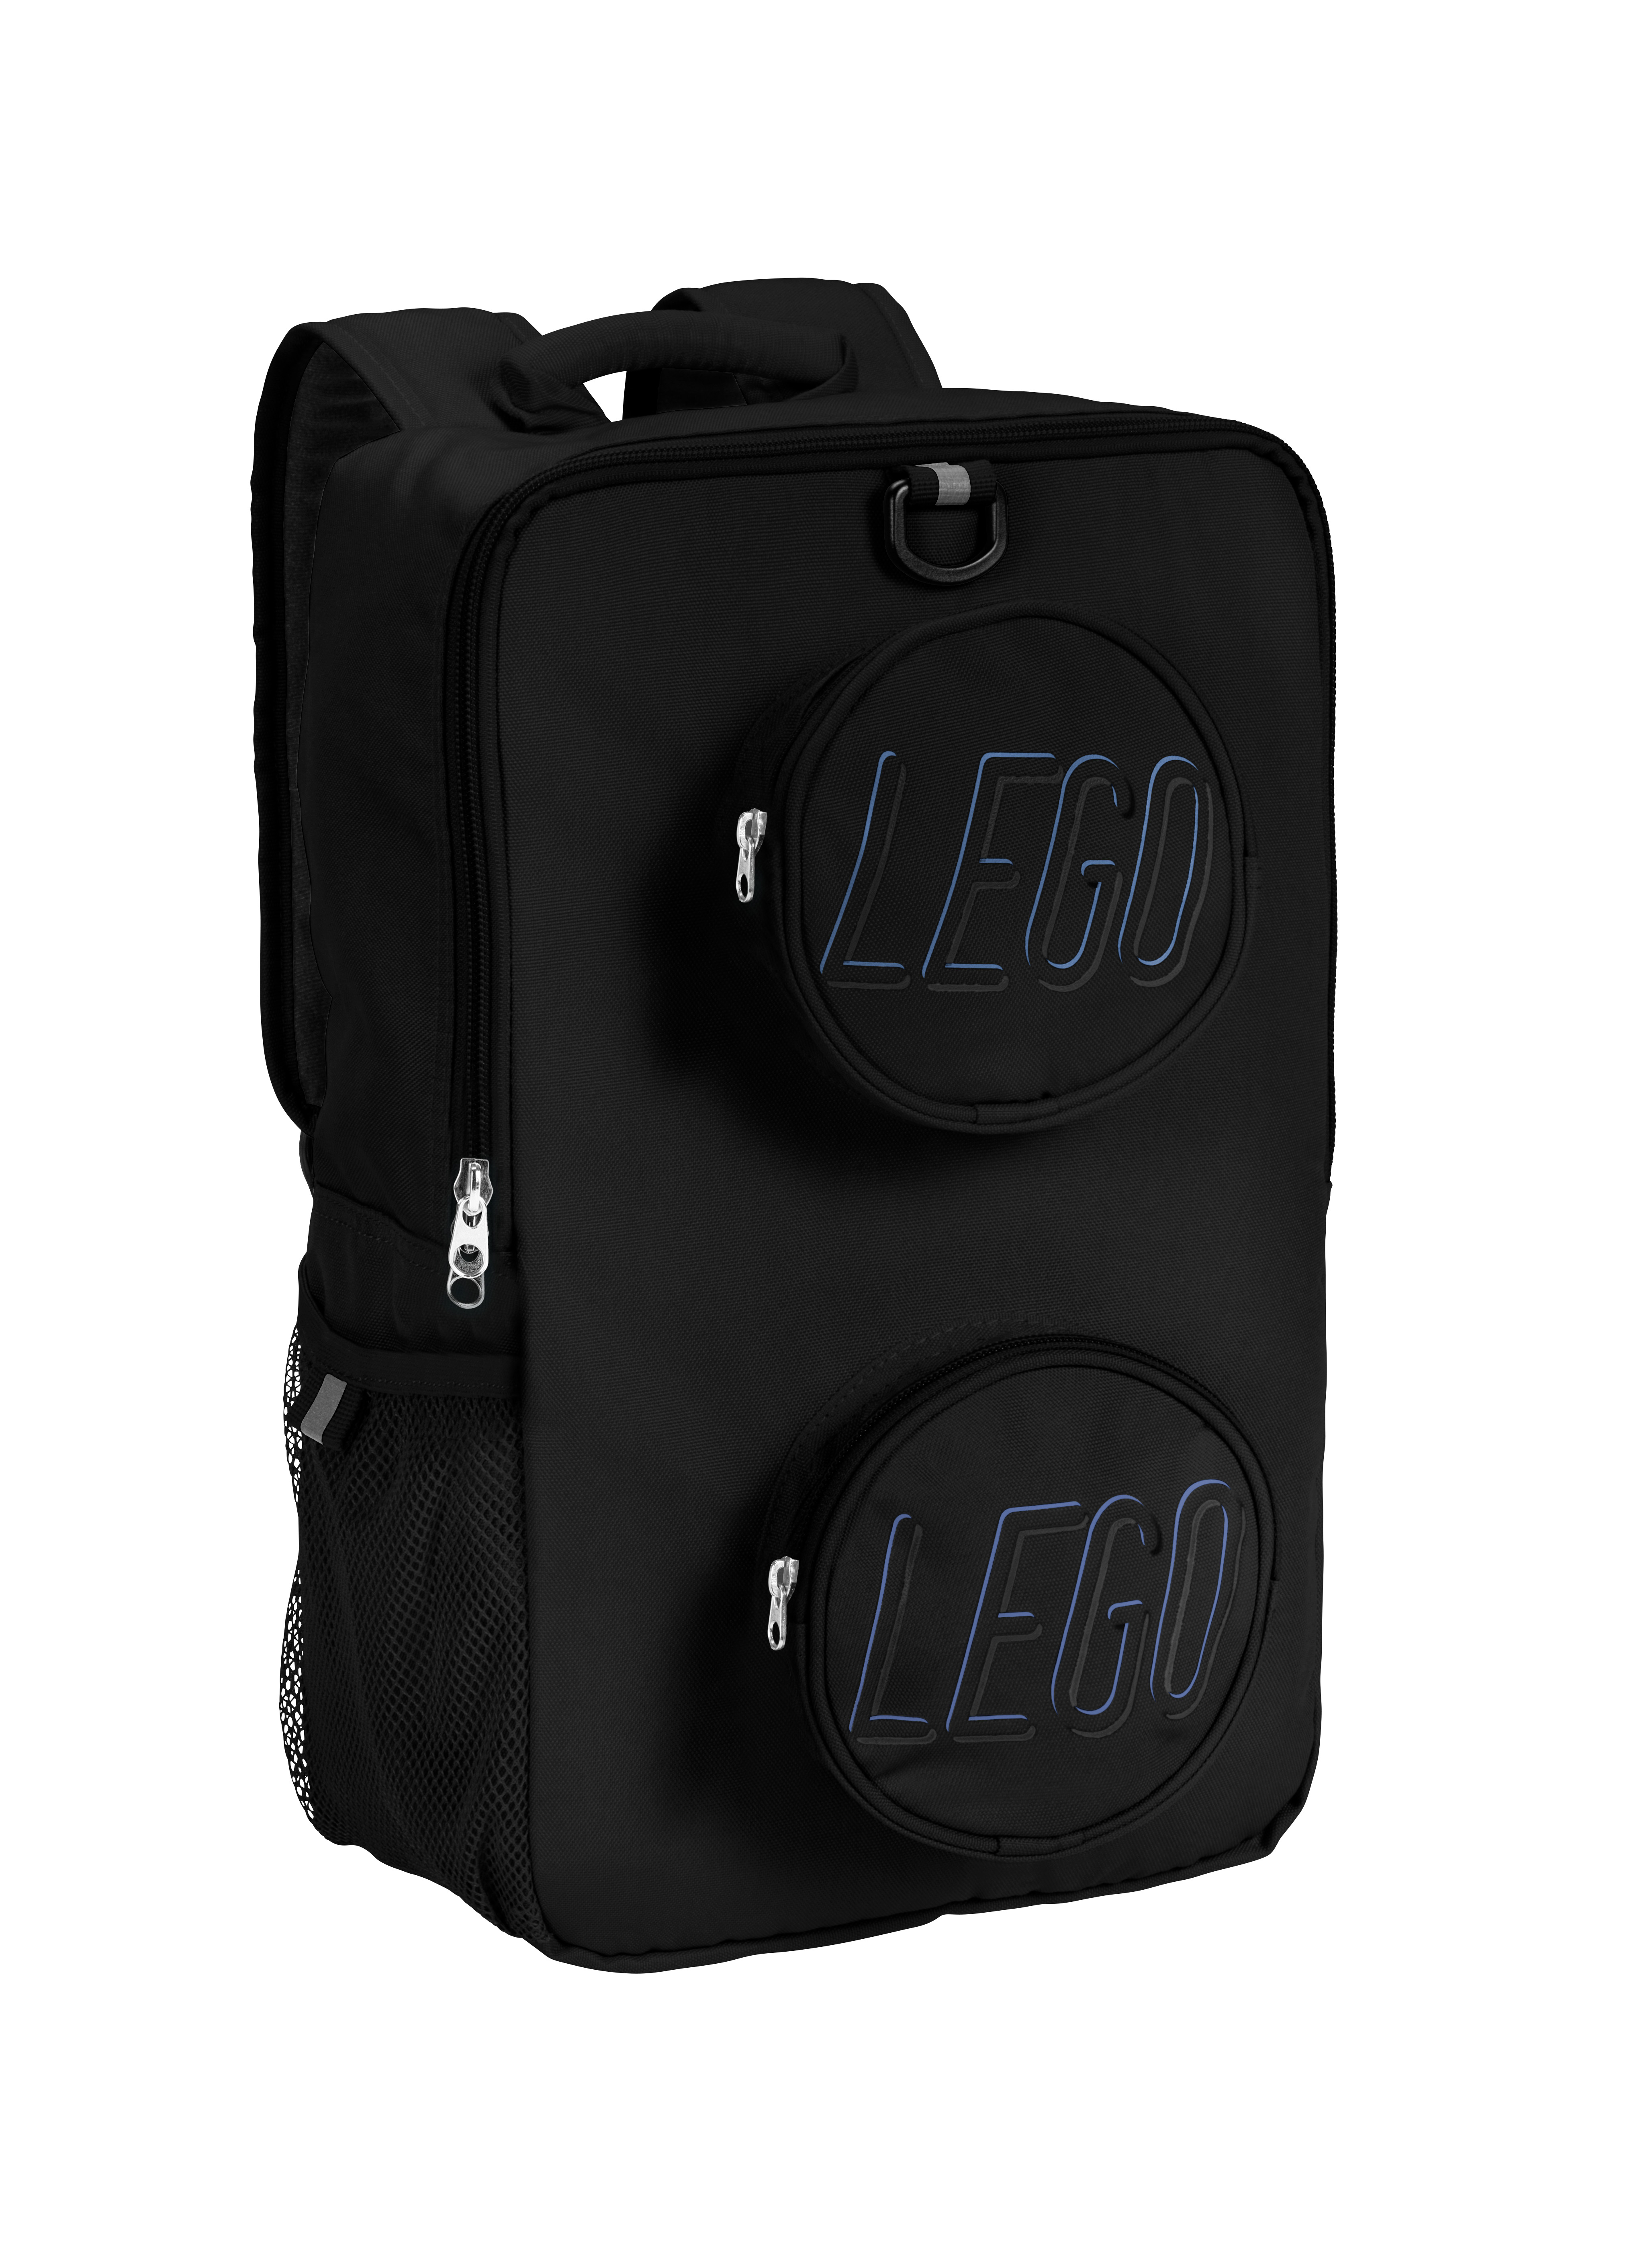 Backpack – Black 5005537 | Other | Buy online at the Official LEGO® Shop US